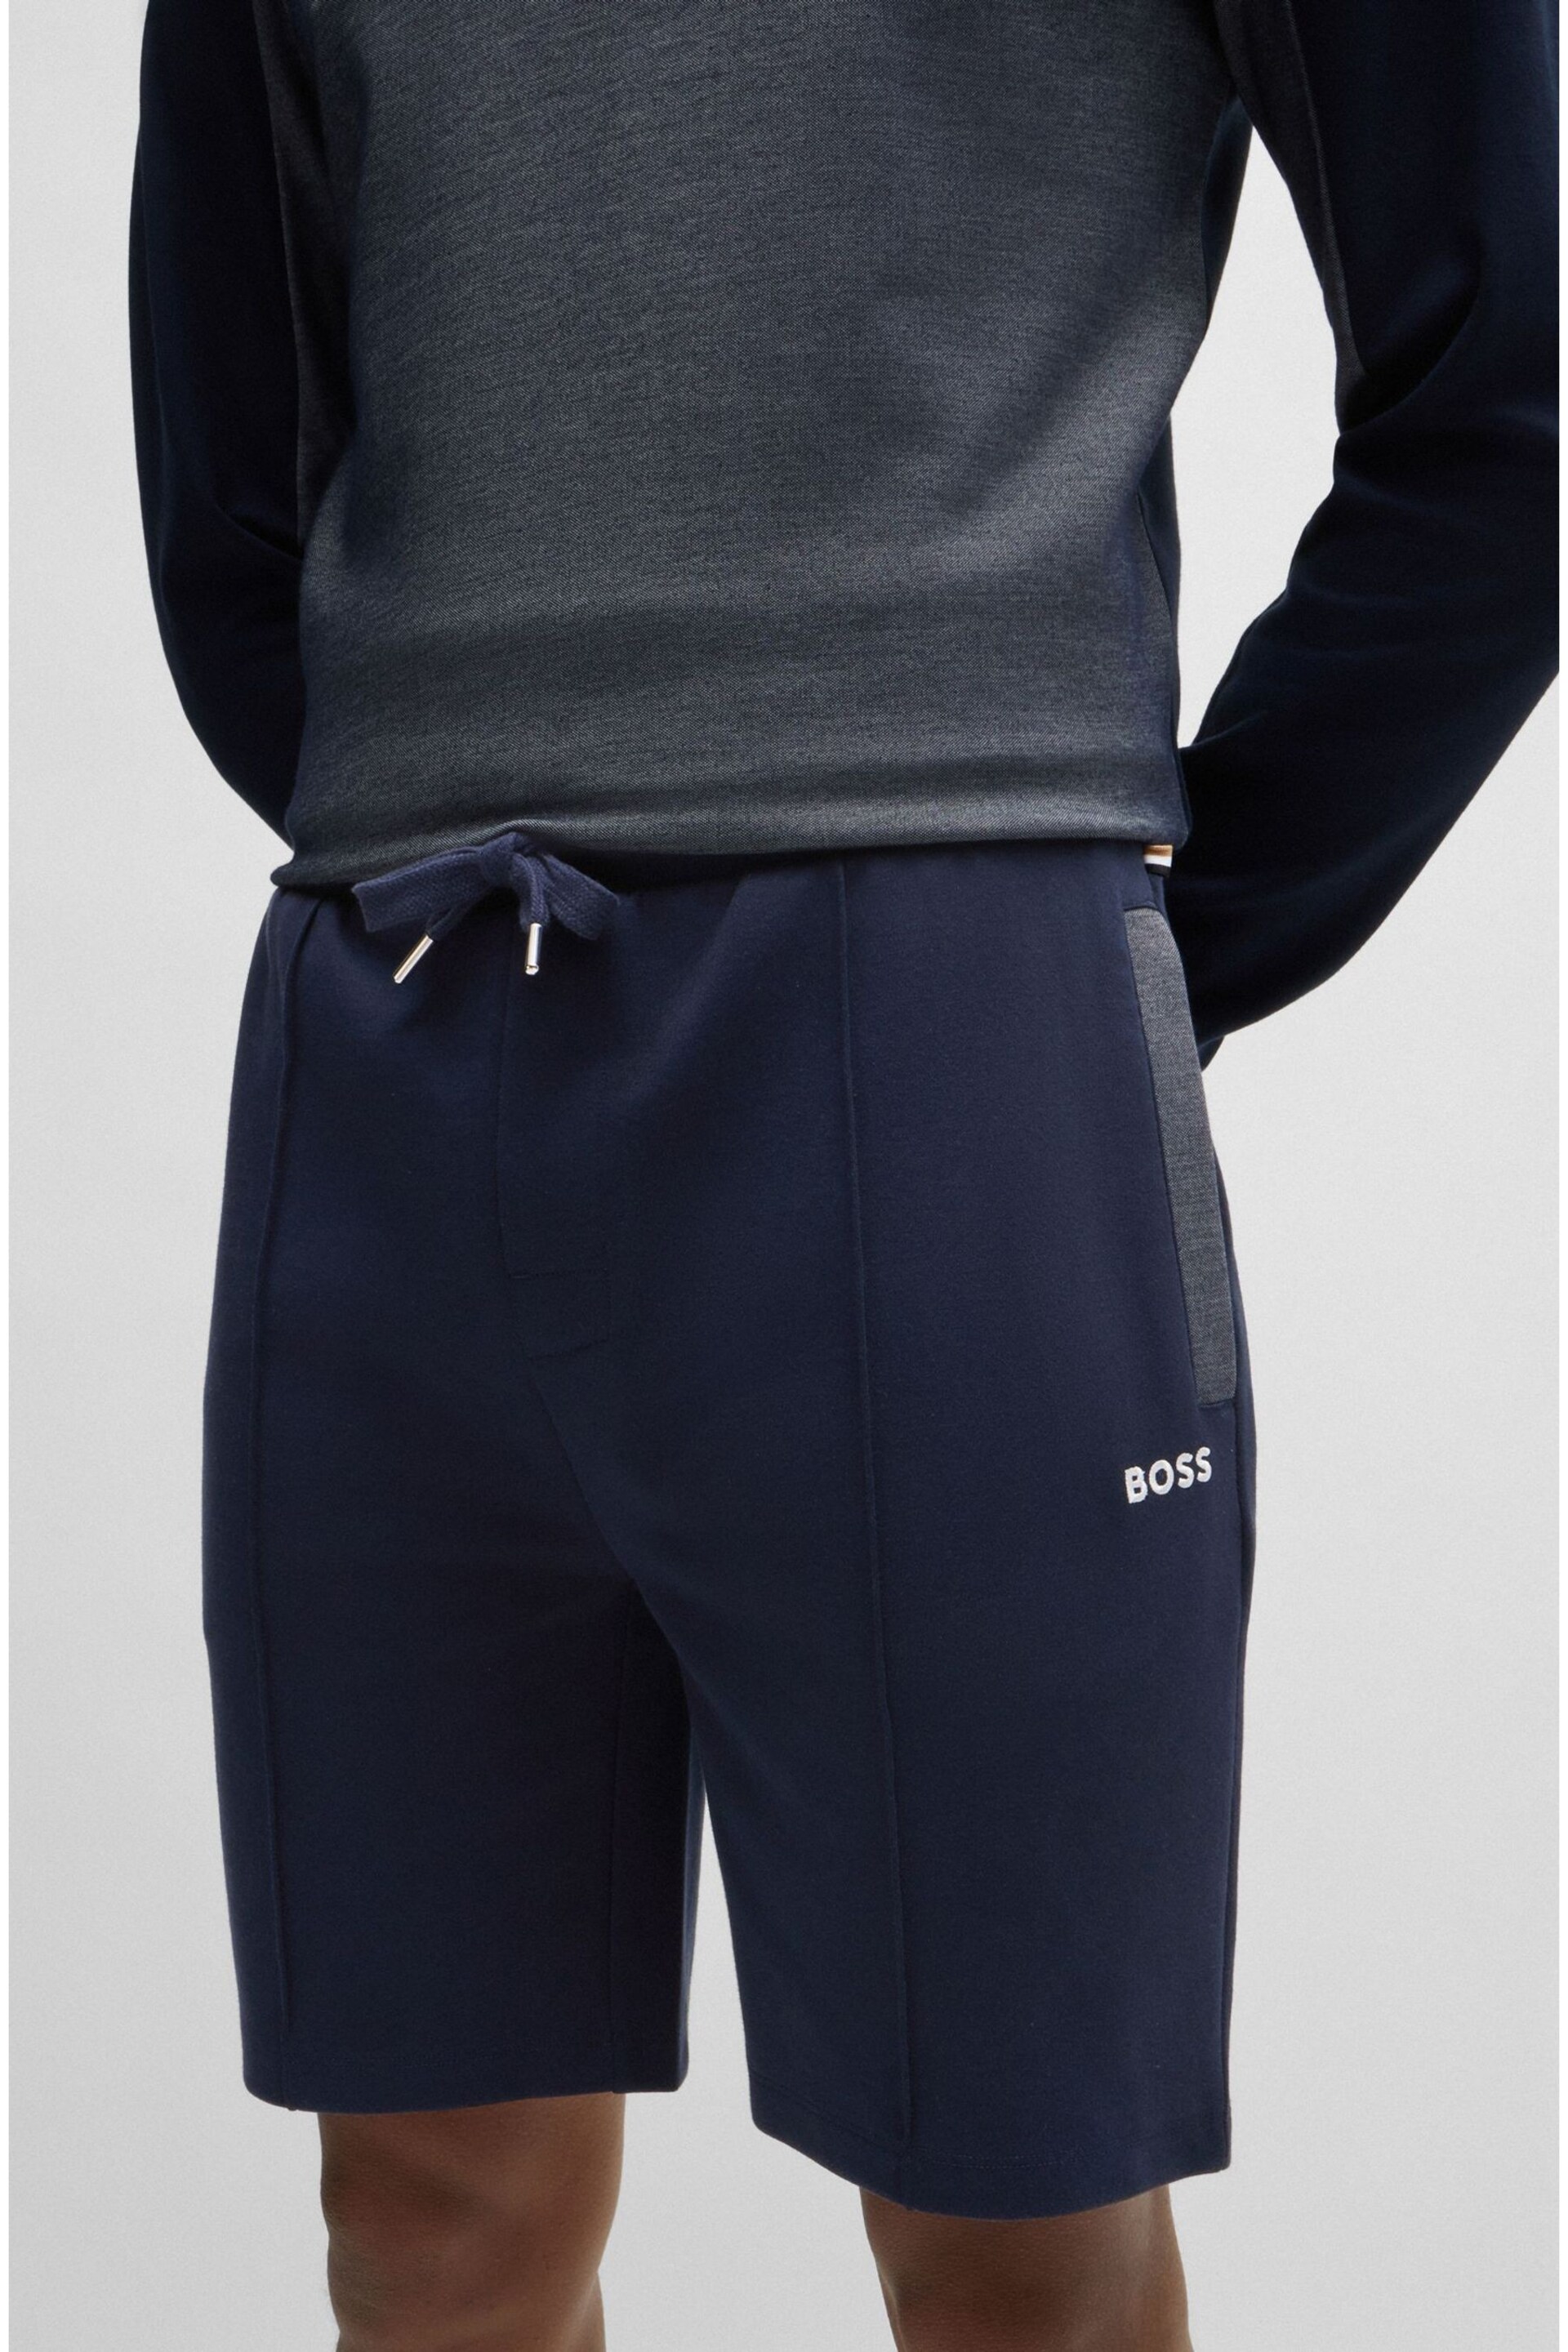 BOSS Blue Drawstring Cotton Pique Blend Jersey Shorts - Image 1 of 5